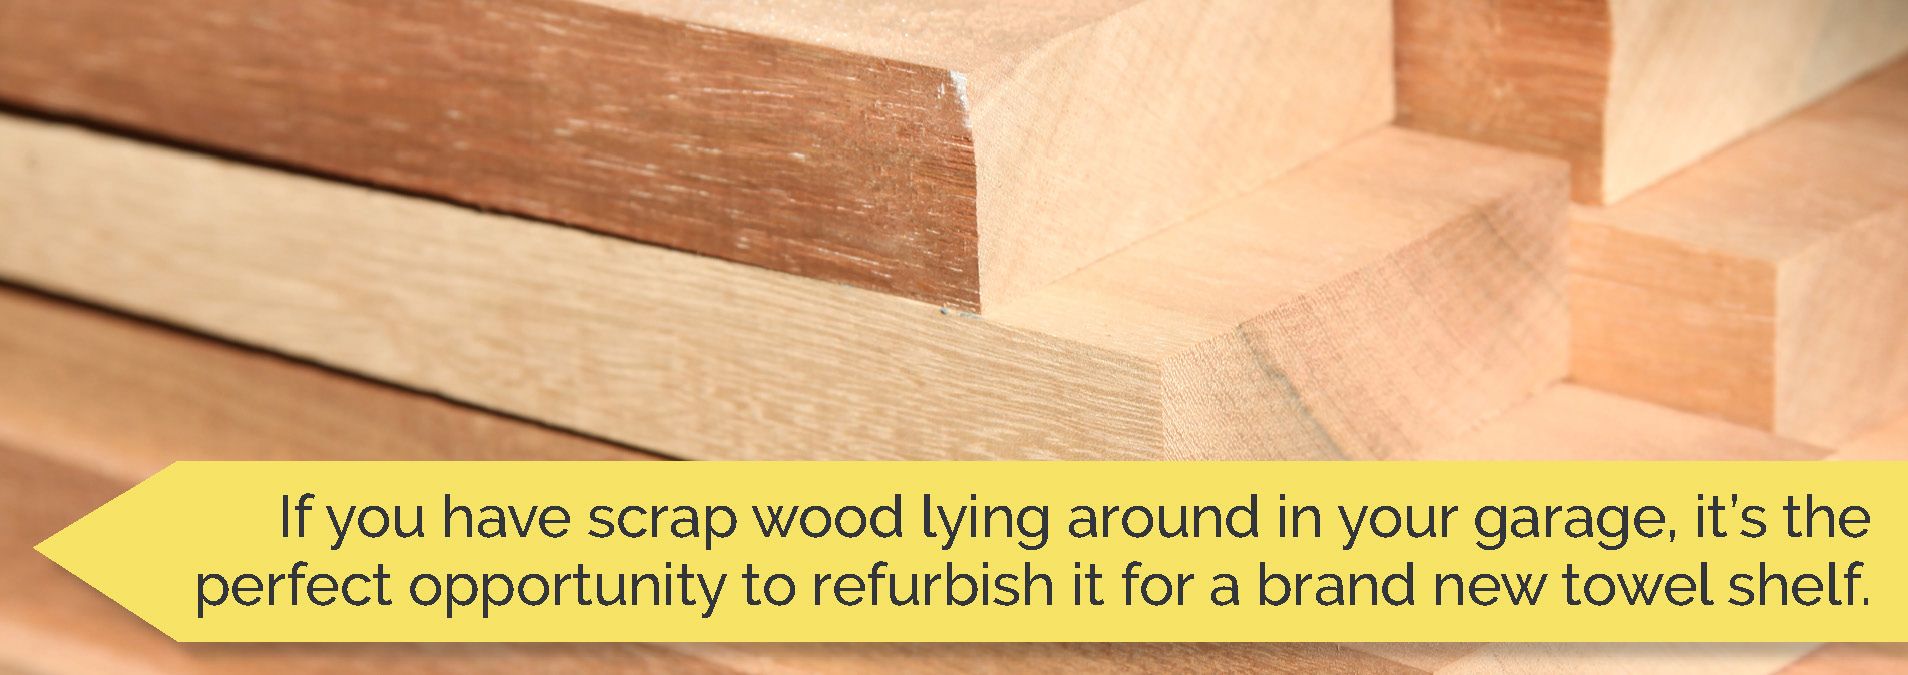 Repurpose scrap wood into a towel shelf.